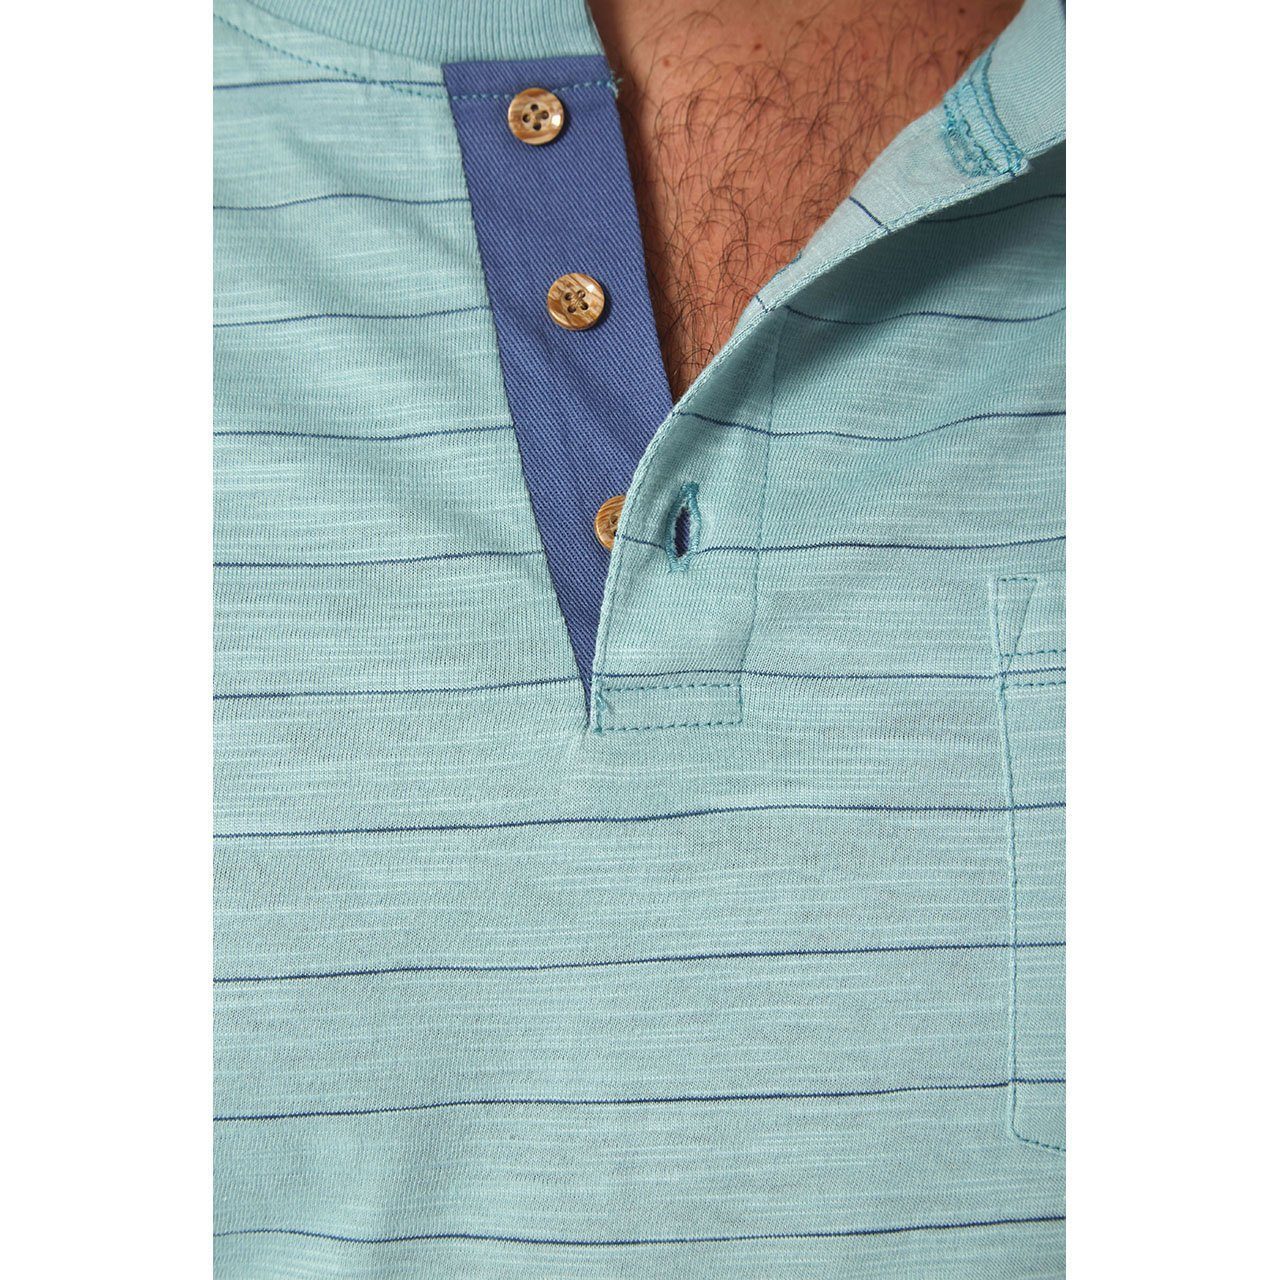 PX Clothing Men's Wade Turquoise Pinstripe Short Sleeve Henley Shirt - Men - Apparel - Shirts - Henley - Benn~Burry